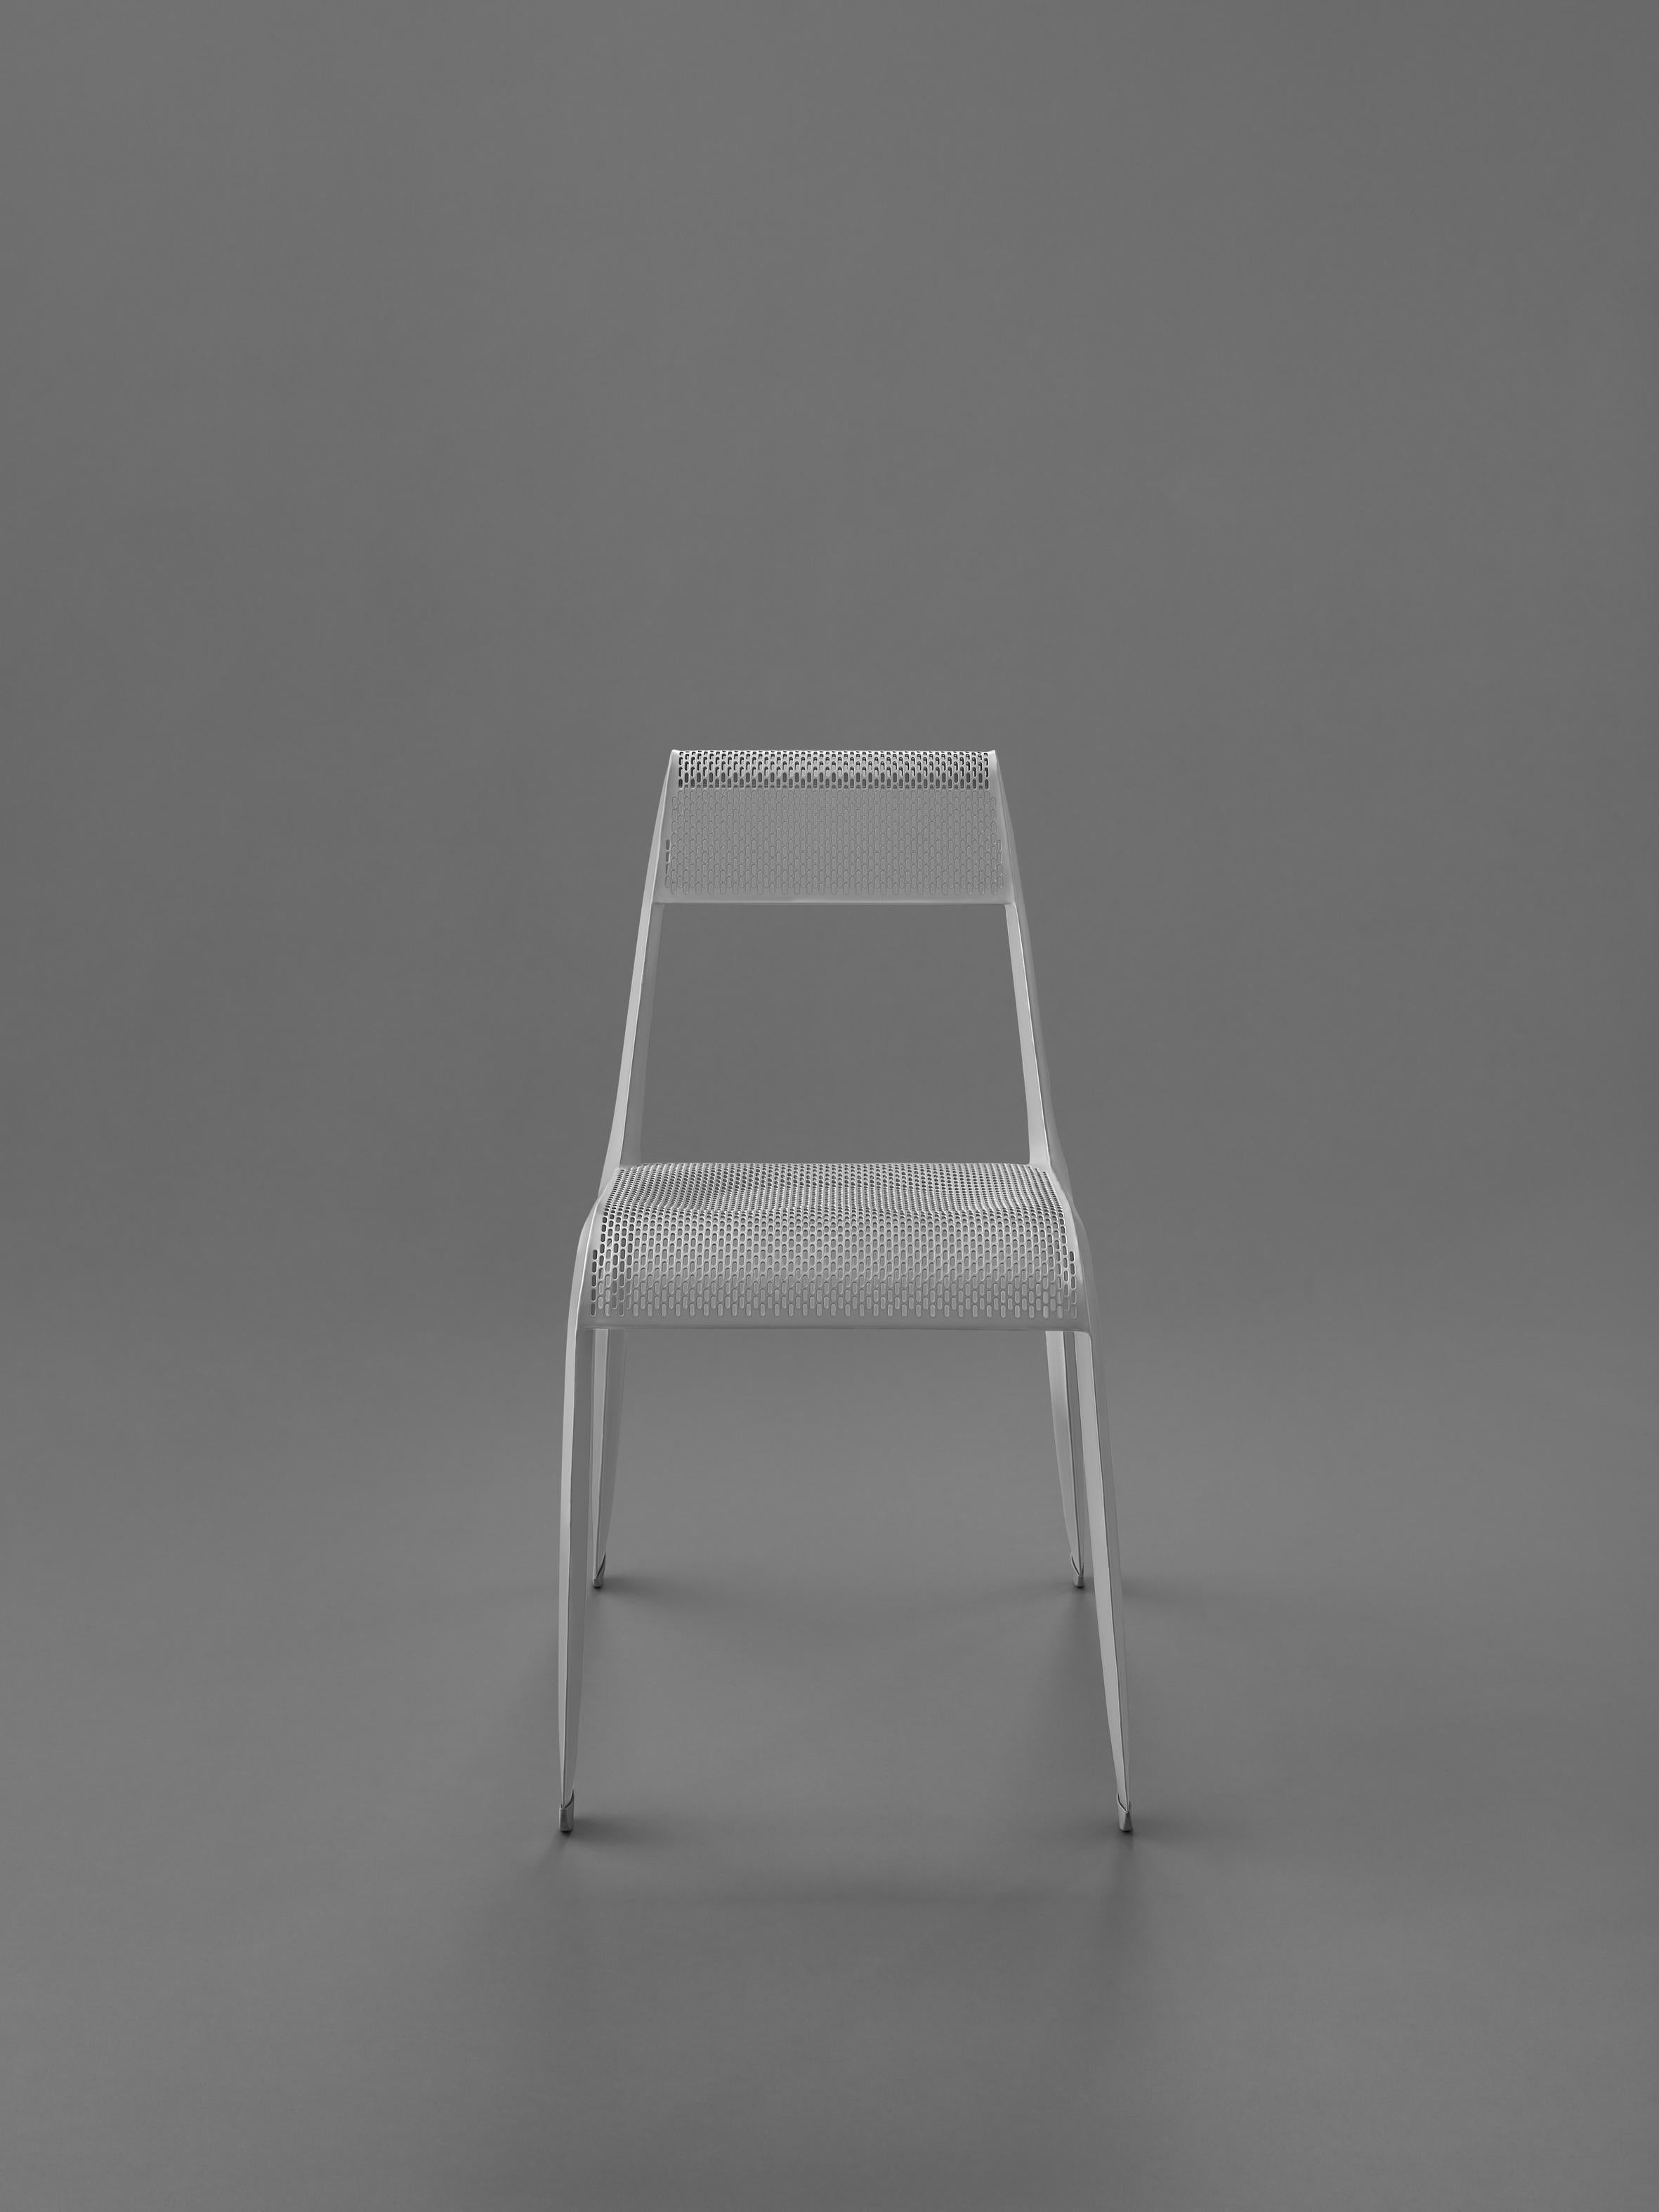 Organic Modern Natural Anodic Ultraleggera Chair by Zieta For Sale